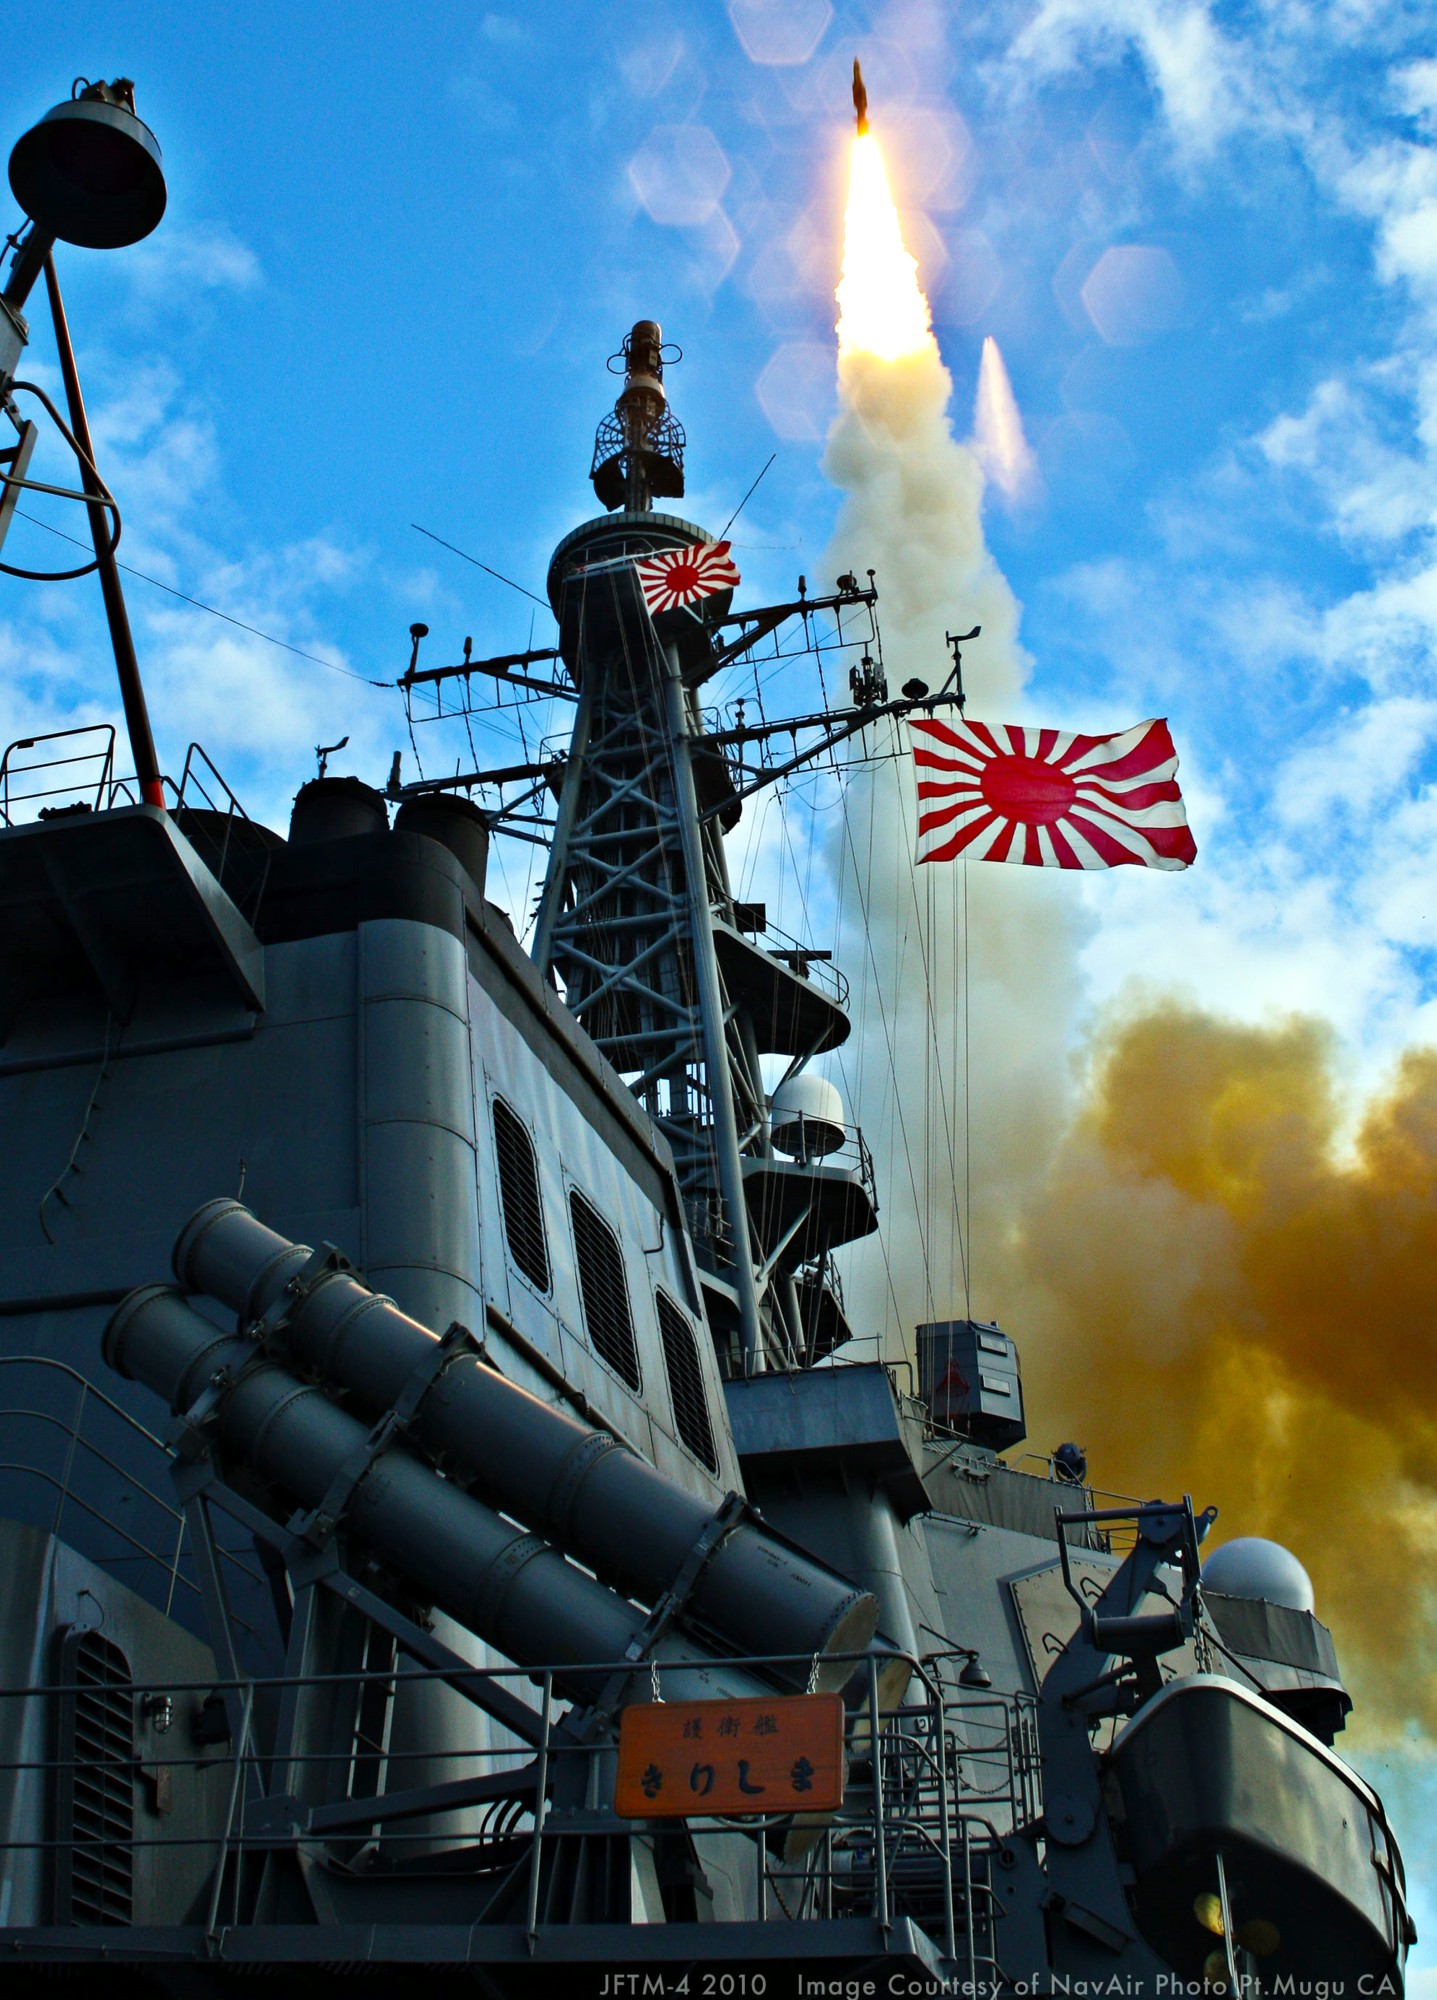 ddg-174 jds kirishima kongou class destroyer japan maritime self defense force jmsdf 20 standard missile sm-3 rim-161 mk-41 vls